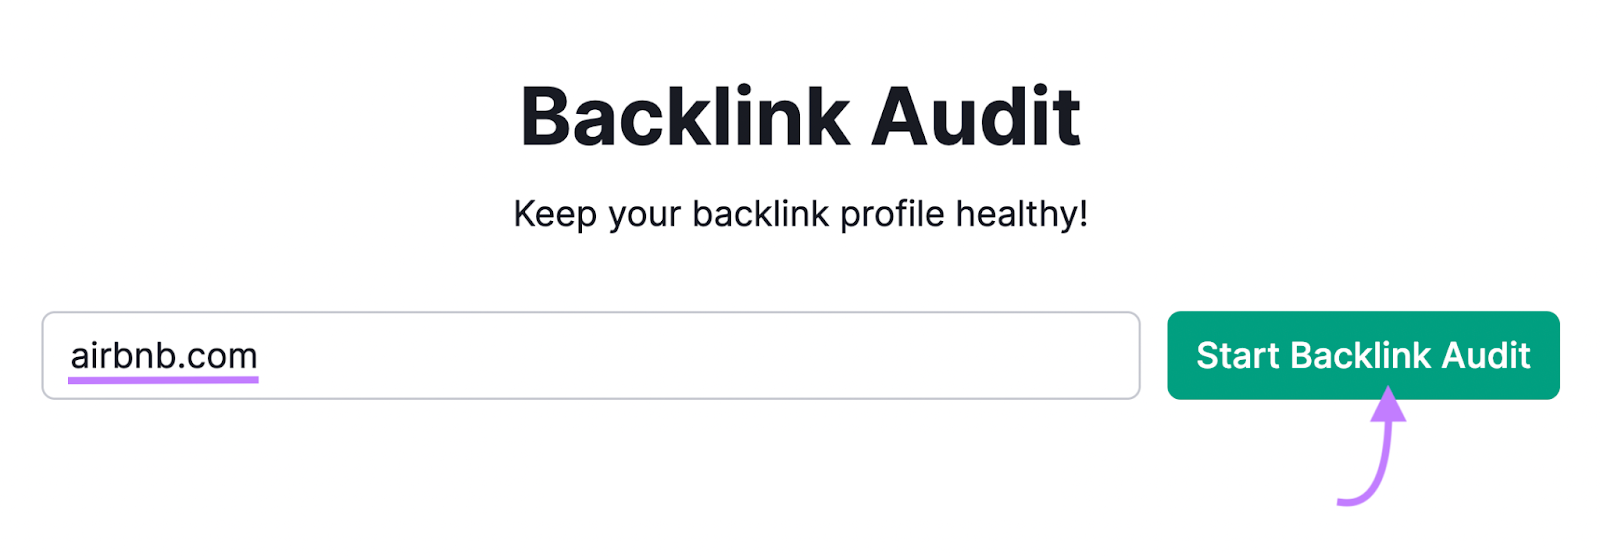 "airbnb.com" entered into Backlink Audit search bar